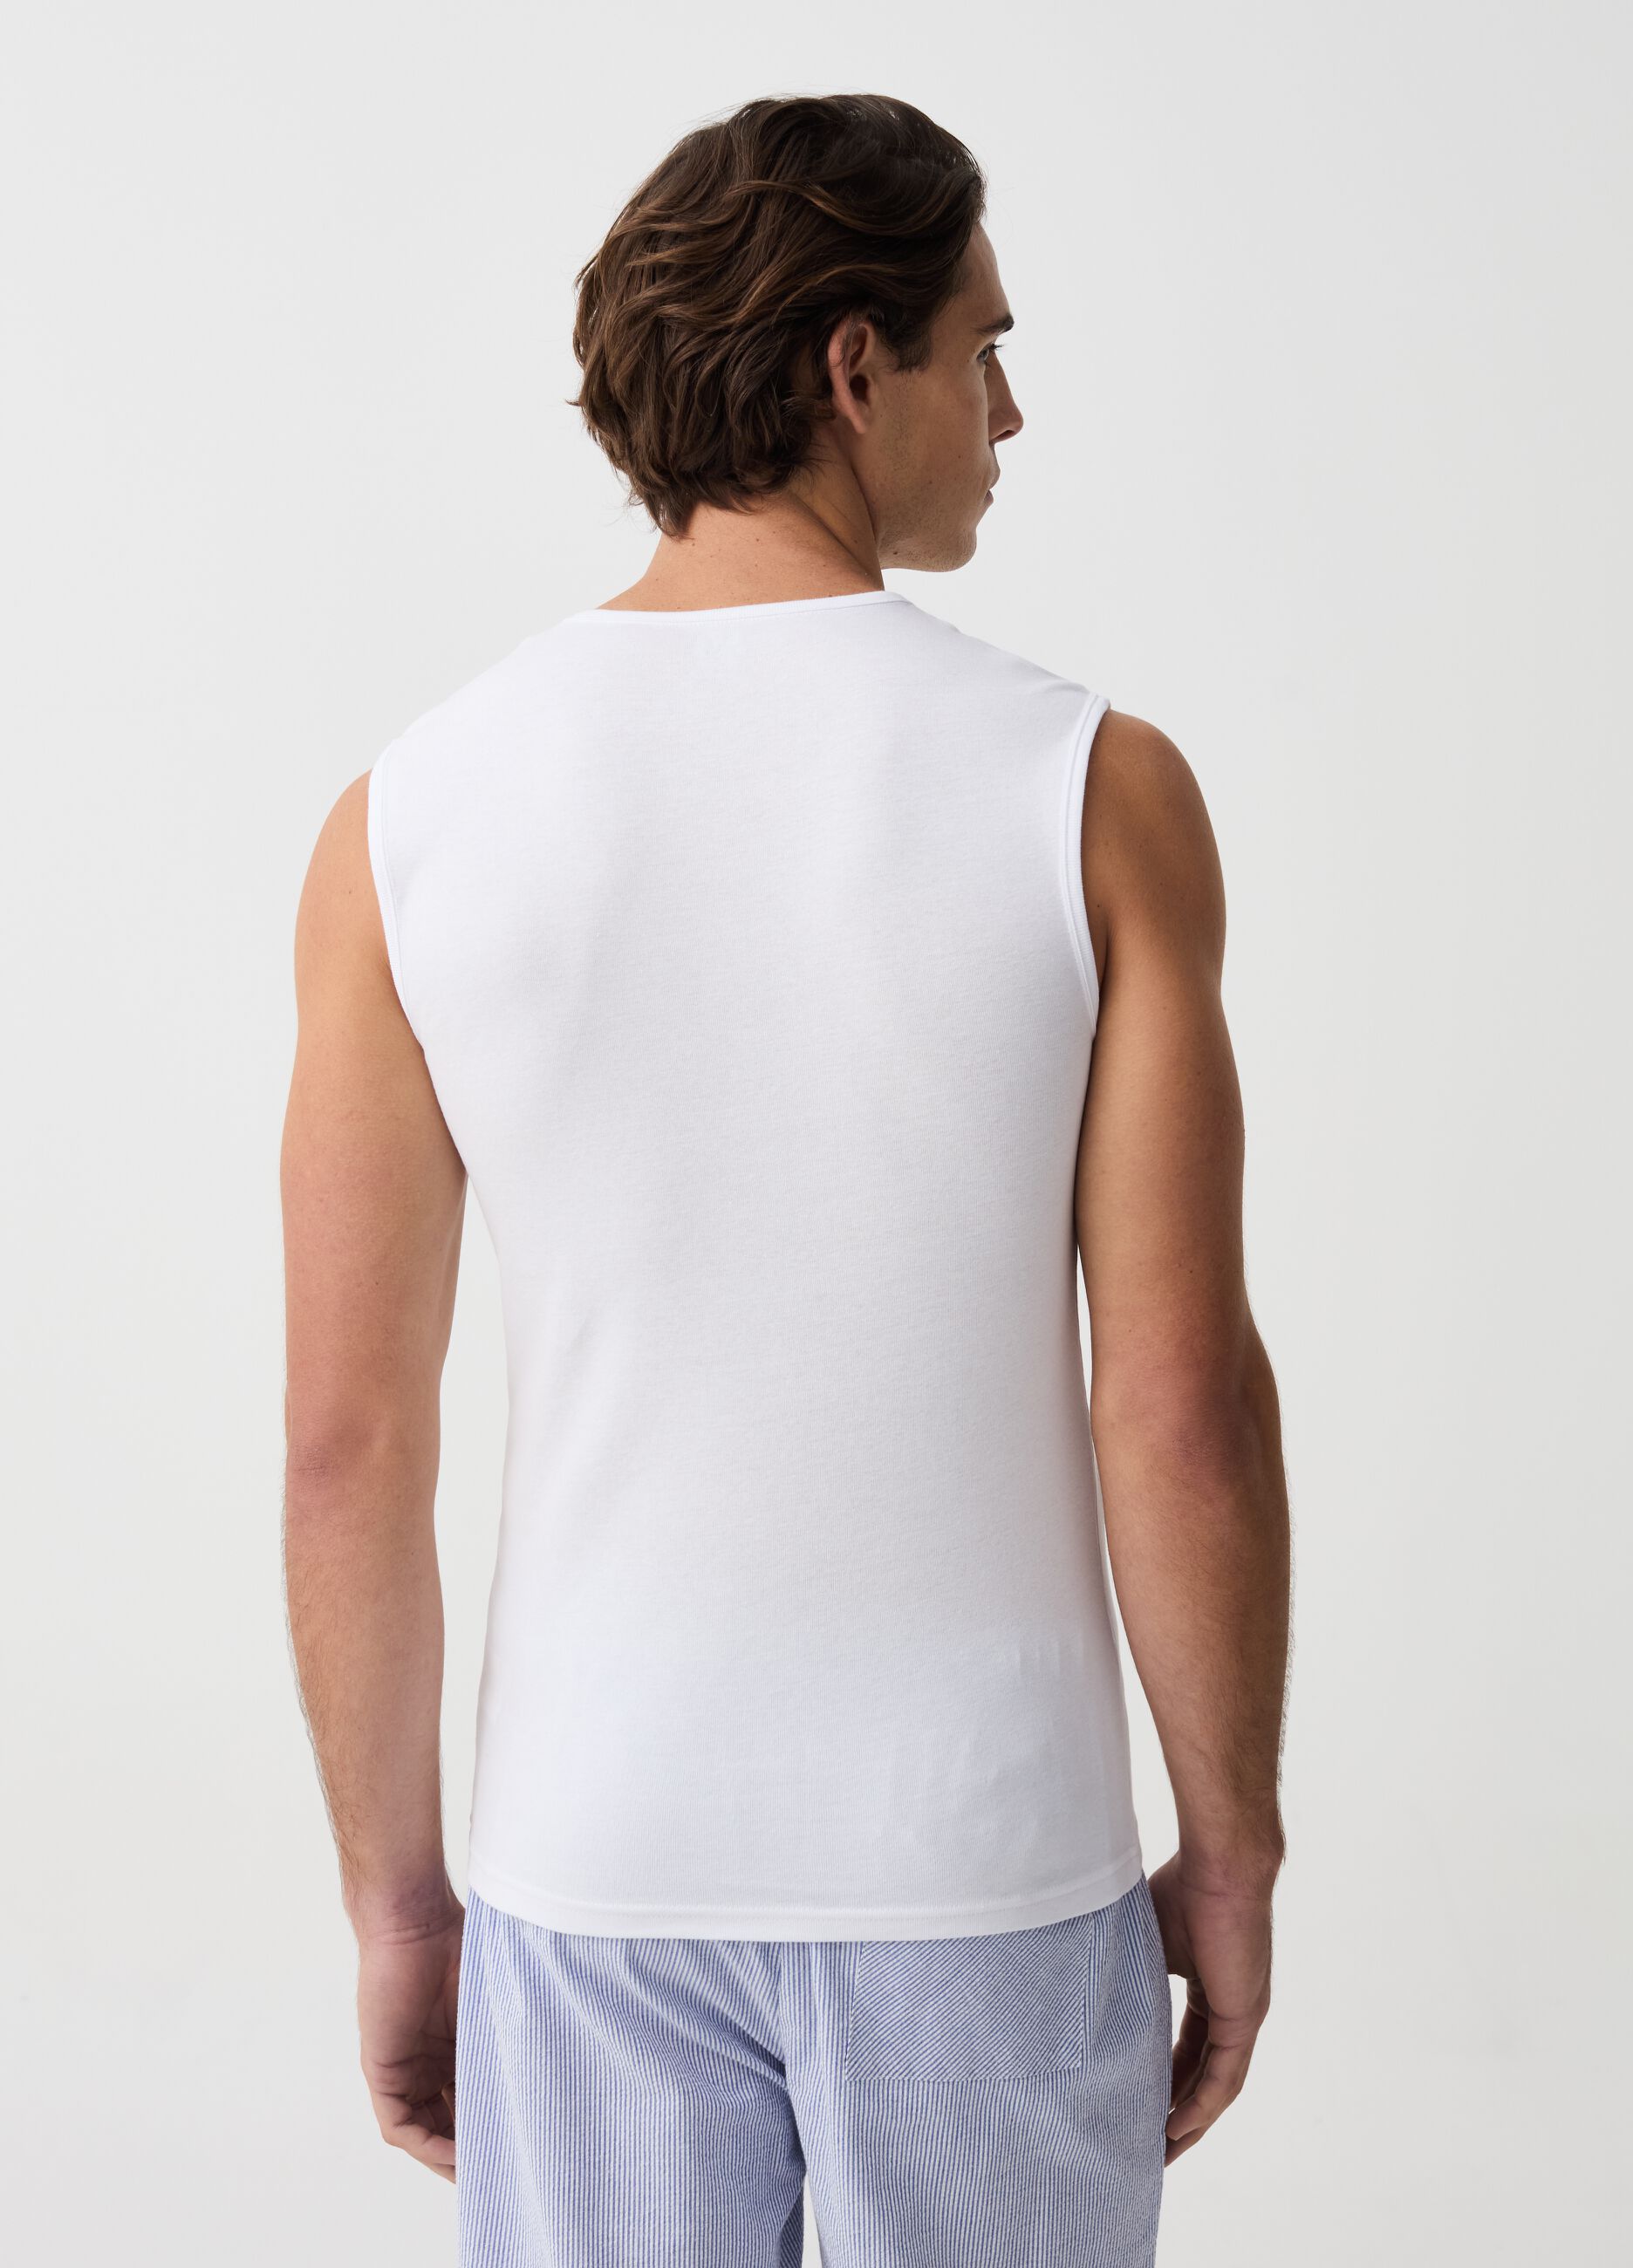 V-neck racer back vest in organic cotton